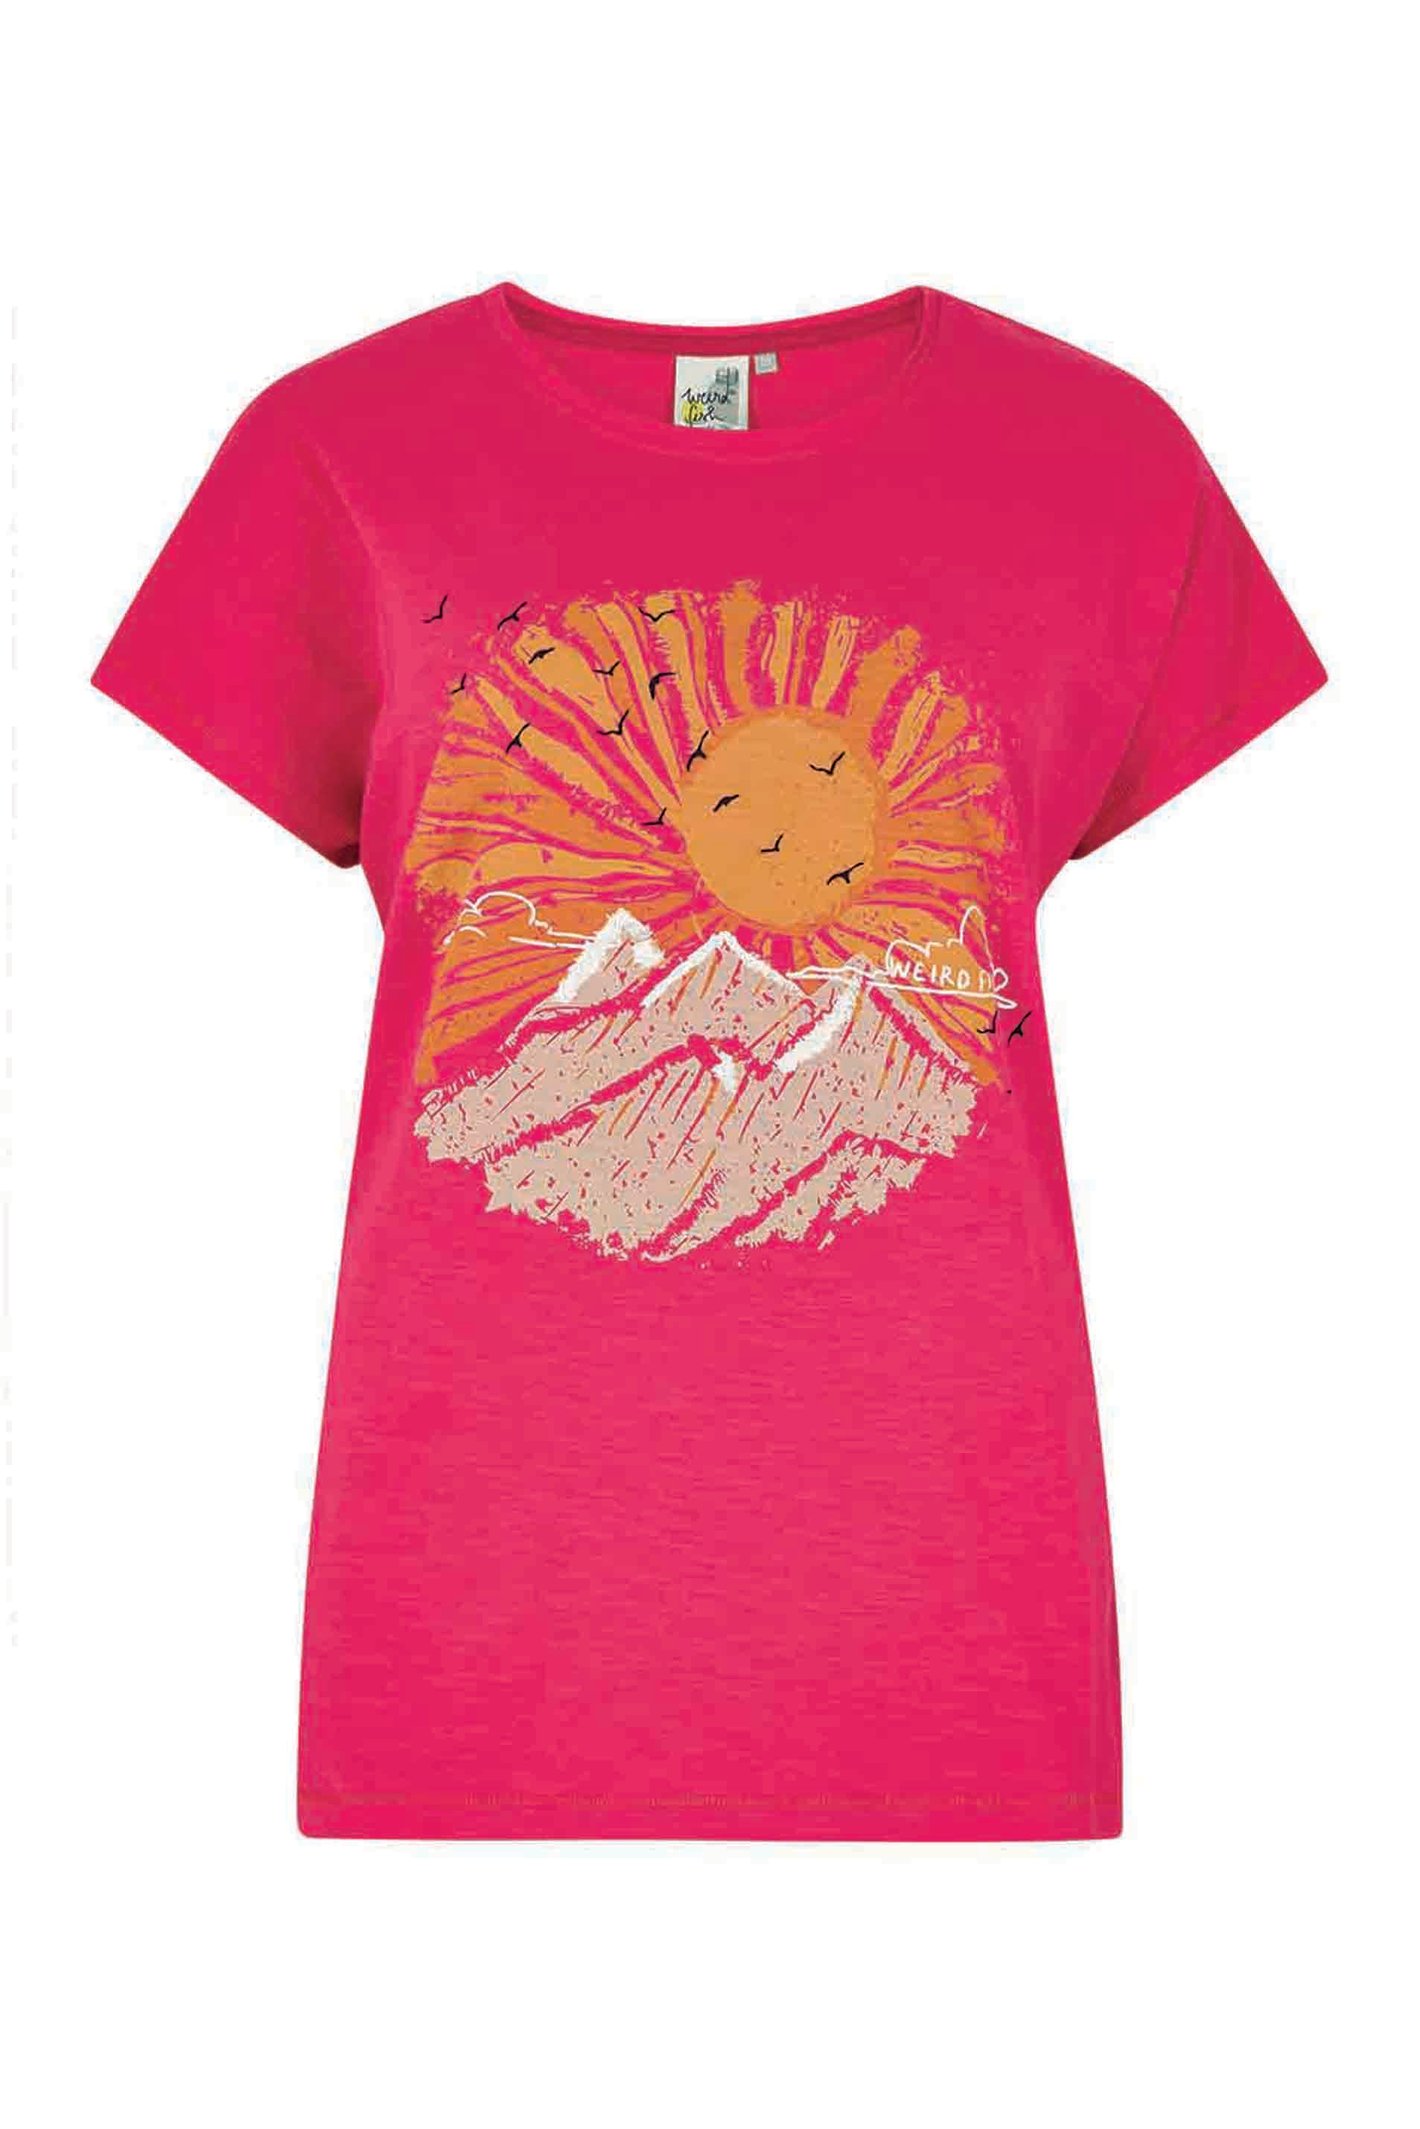 Weird Fish Sundown Organic Cotton Slub T-Shirt  Hot Pink Size 20